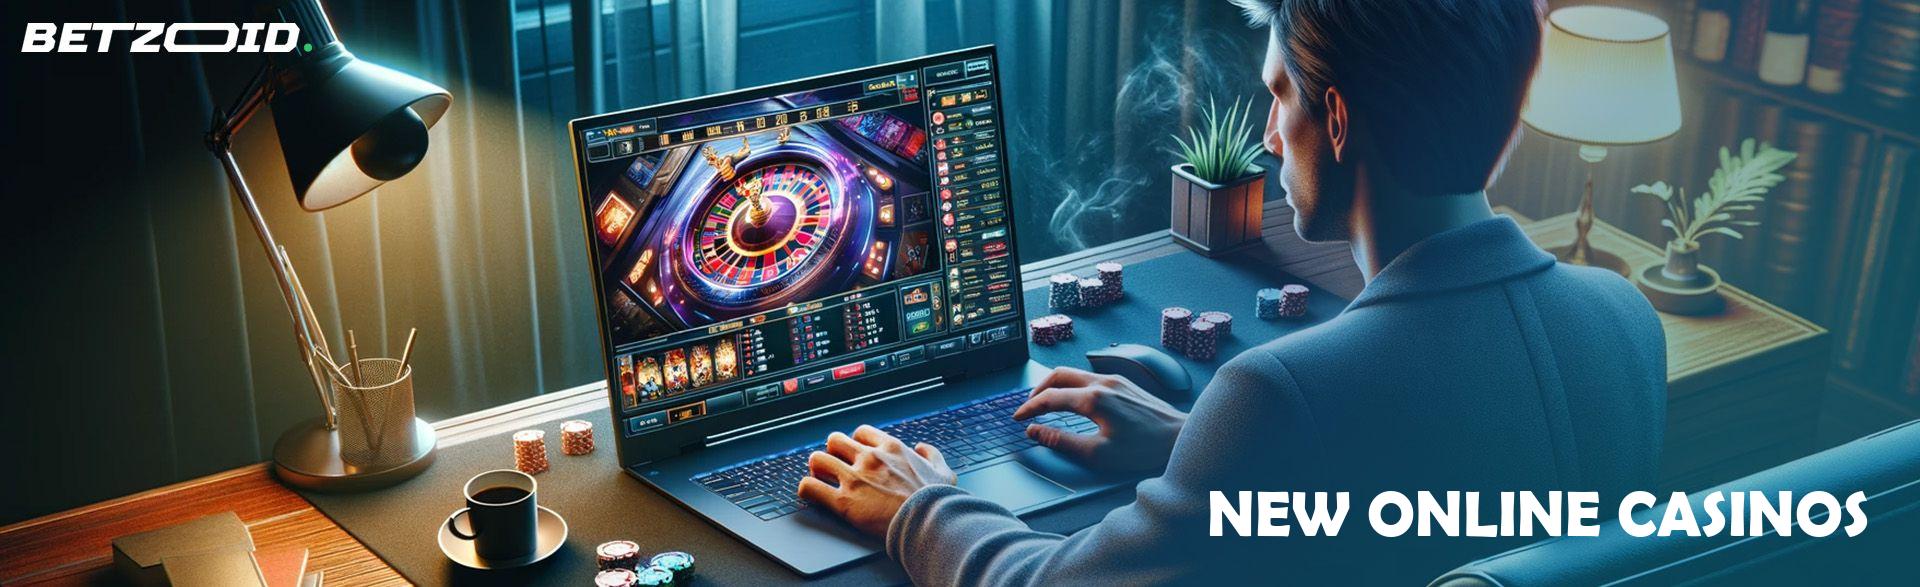 New Online Casinos.